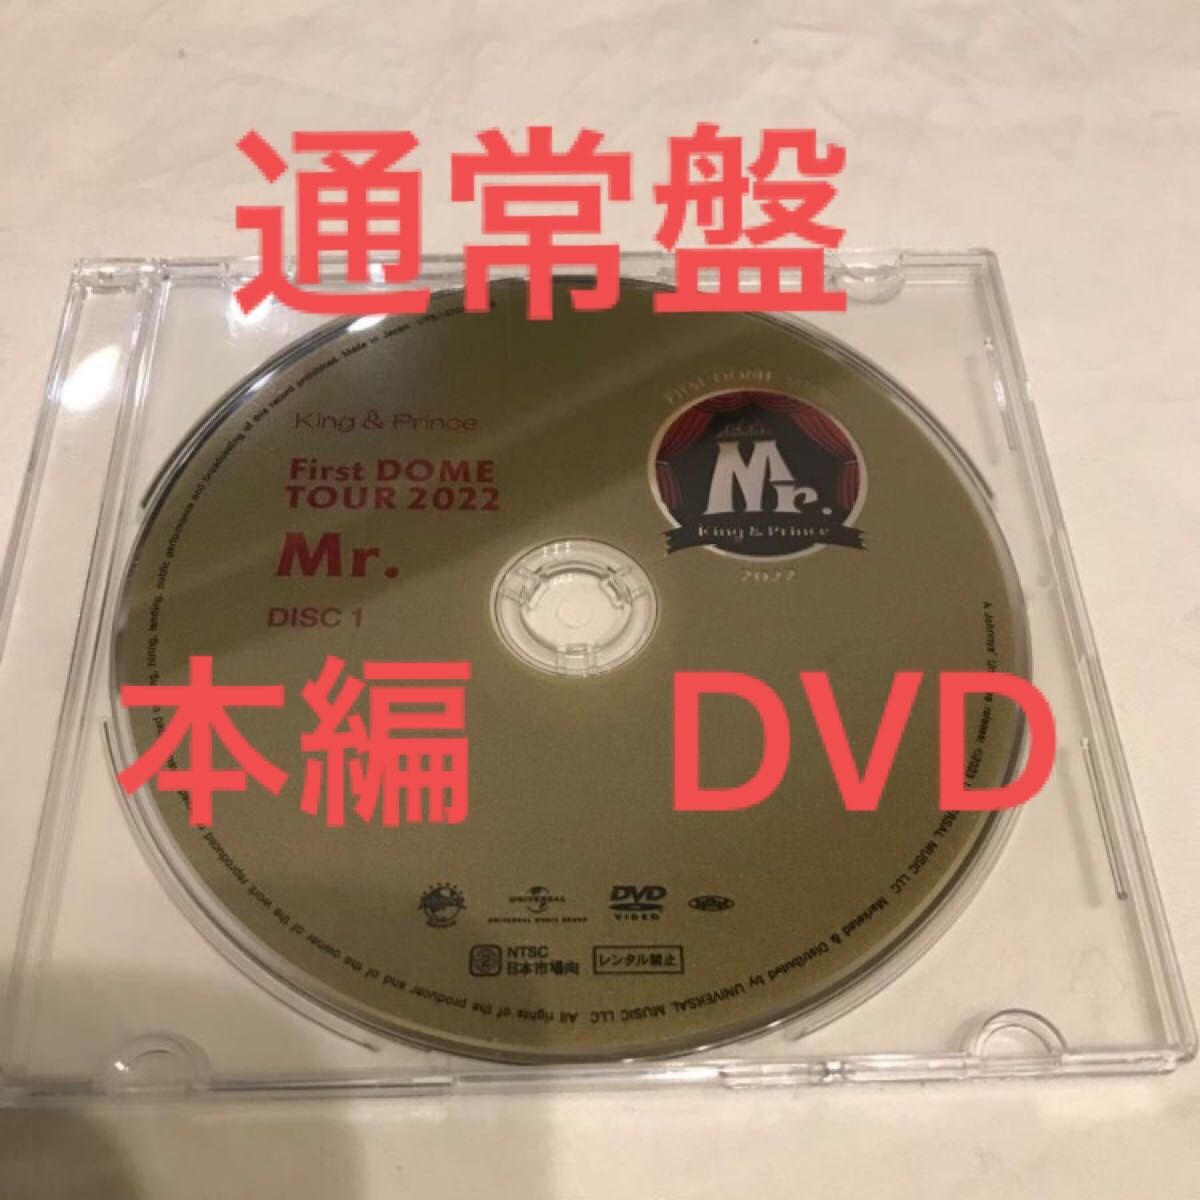 DVD 本編のみ　King & Prince キンプリ DISK1のみMr. 通常盤　初回盤　ともに本編内容同じ　新品　未再生